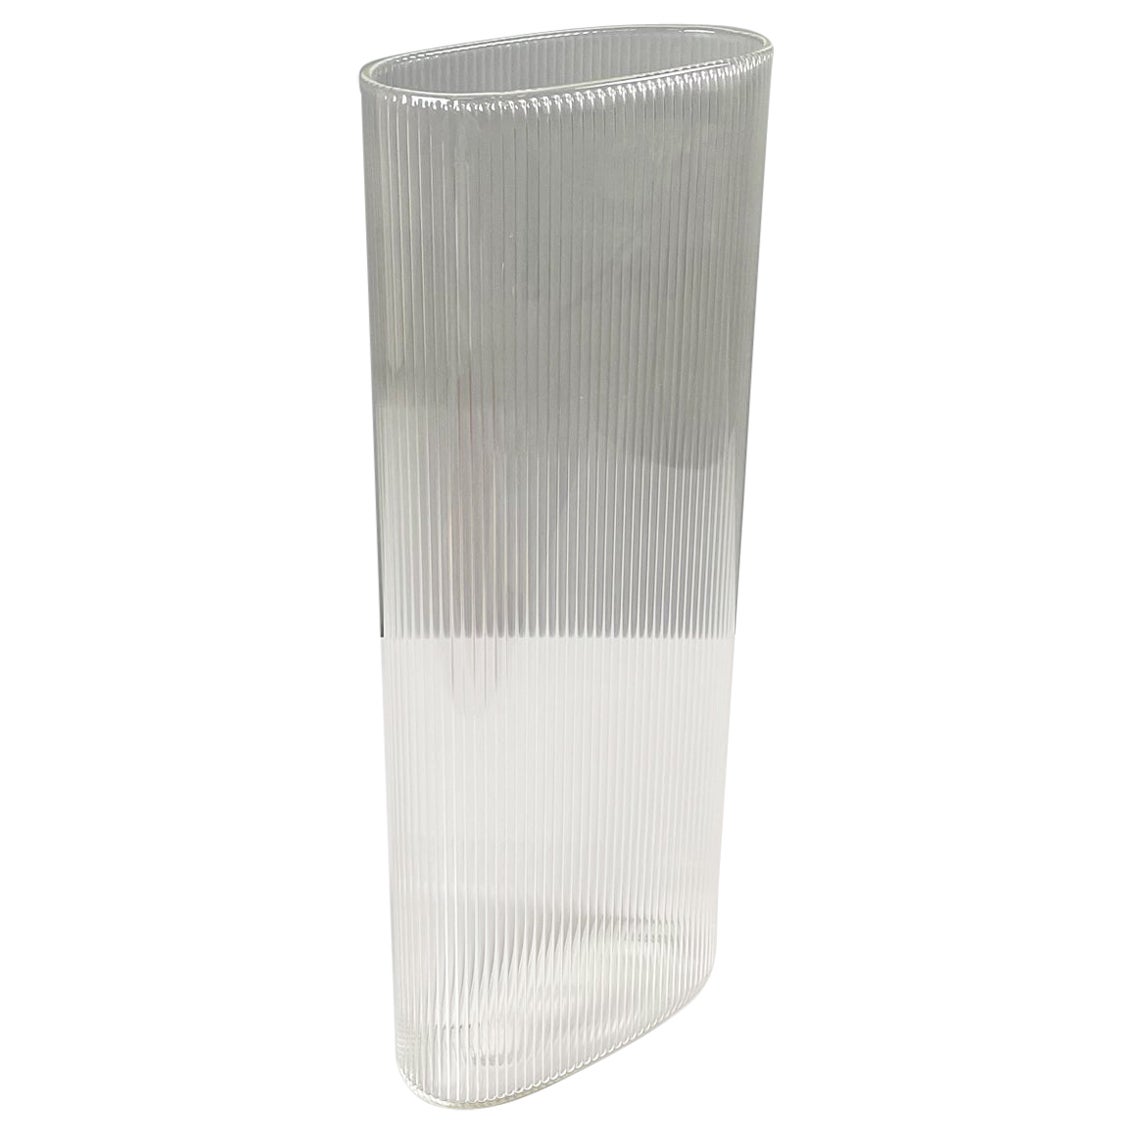 Italian modern Glass vase with oval shape by Roberto Faccioli, 1990s